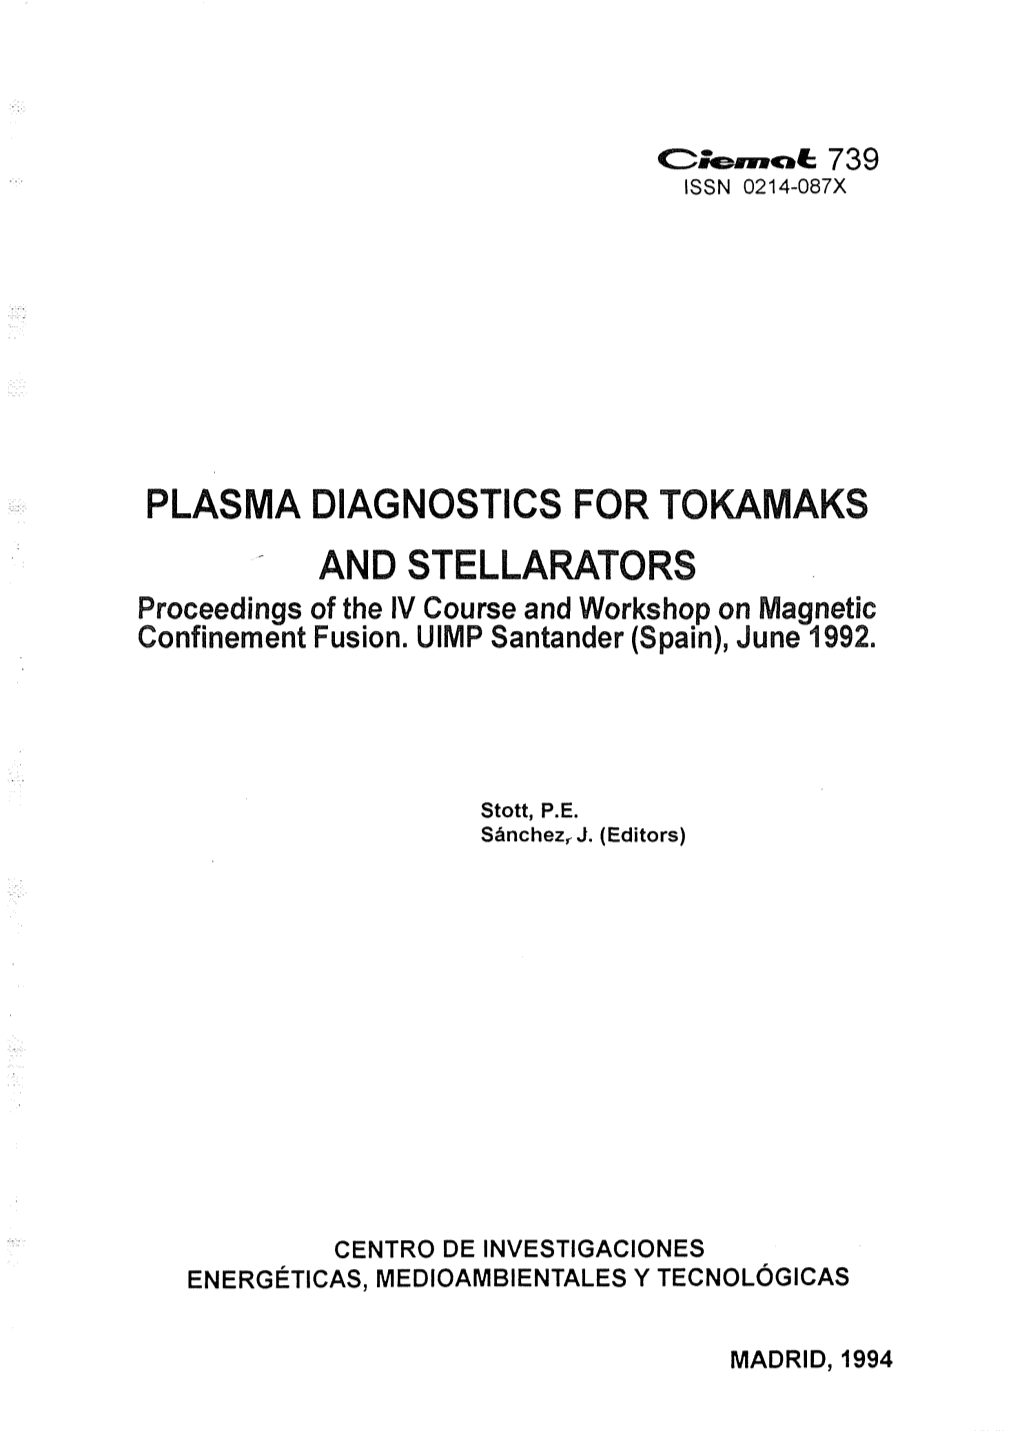 Plasma Diagnostics for Tokamaks and Stellarators. "Plasma Diagnostics for Tokamaks and Stellarators